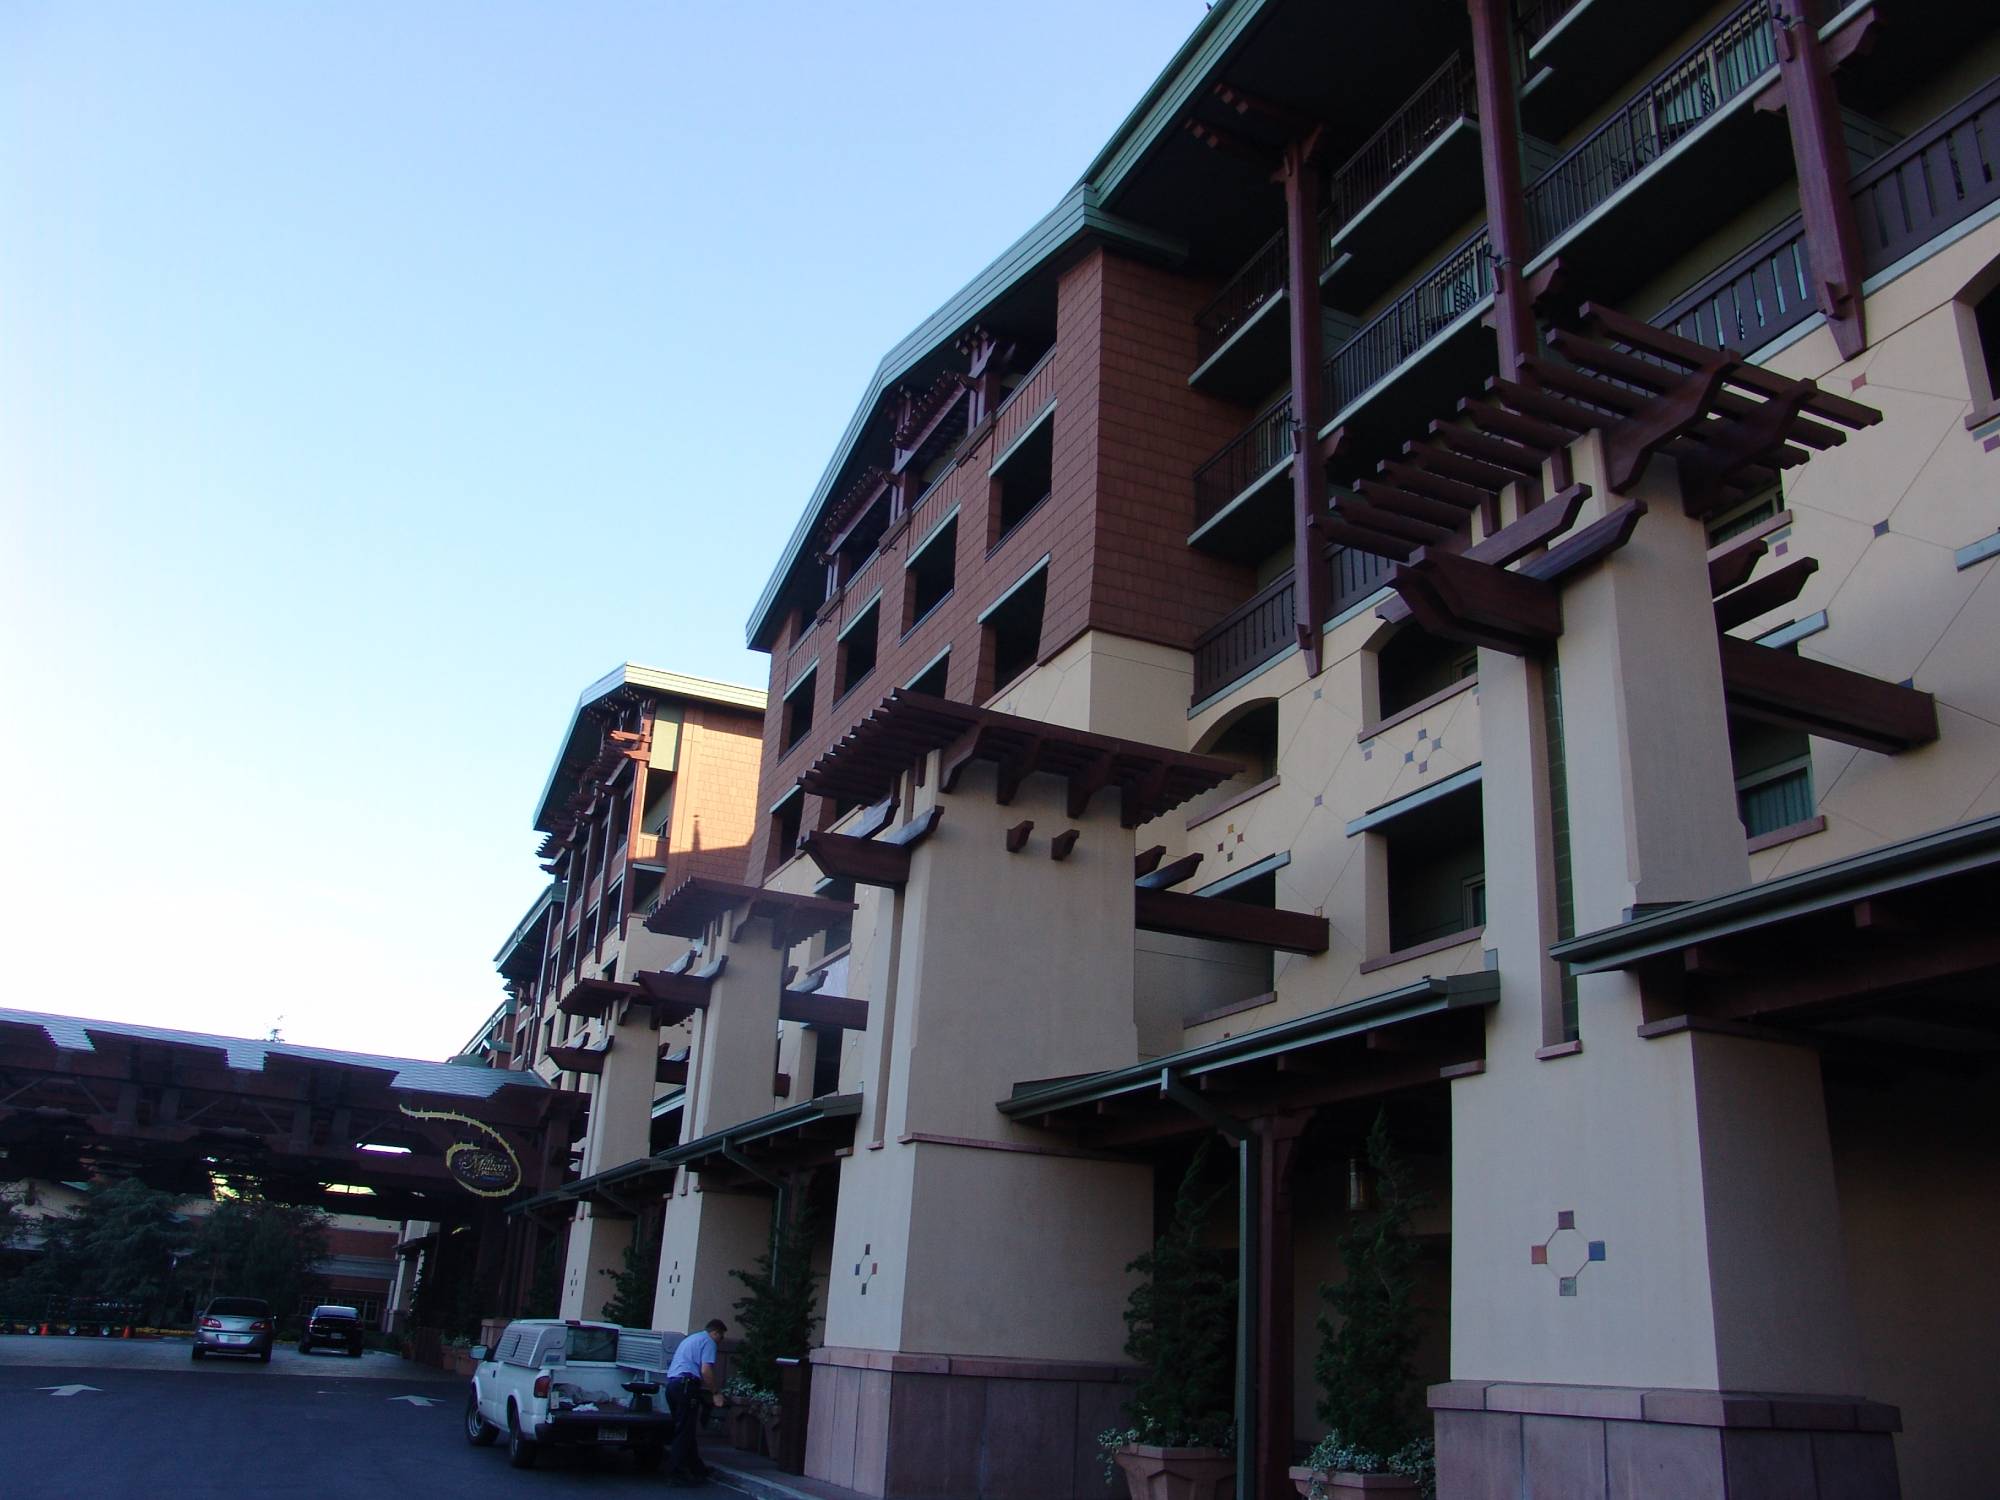 Grand Californian Hotel - entrance